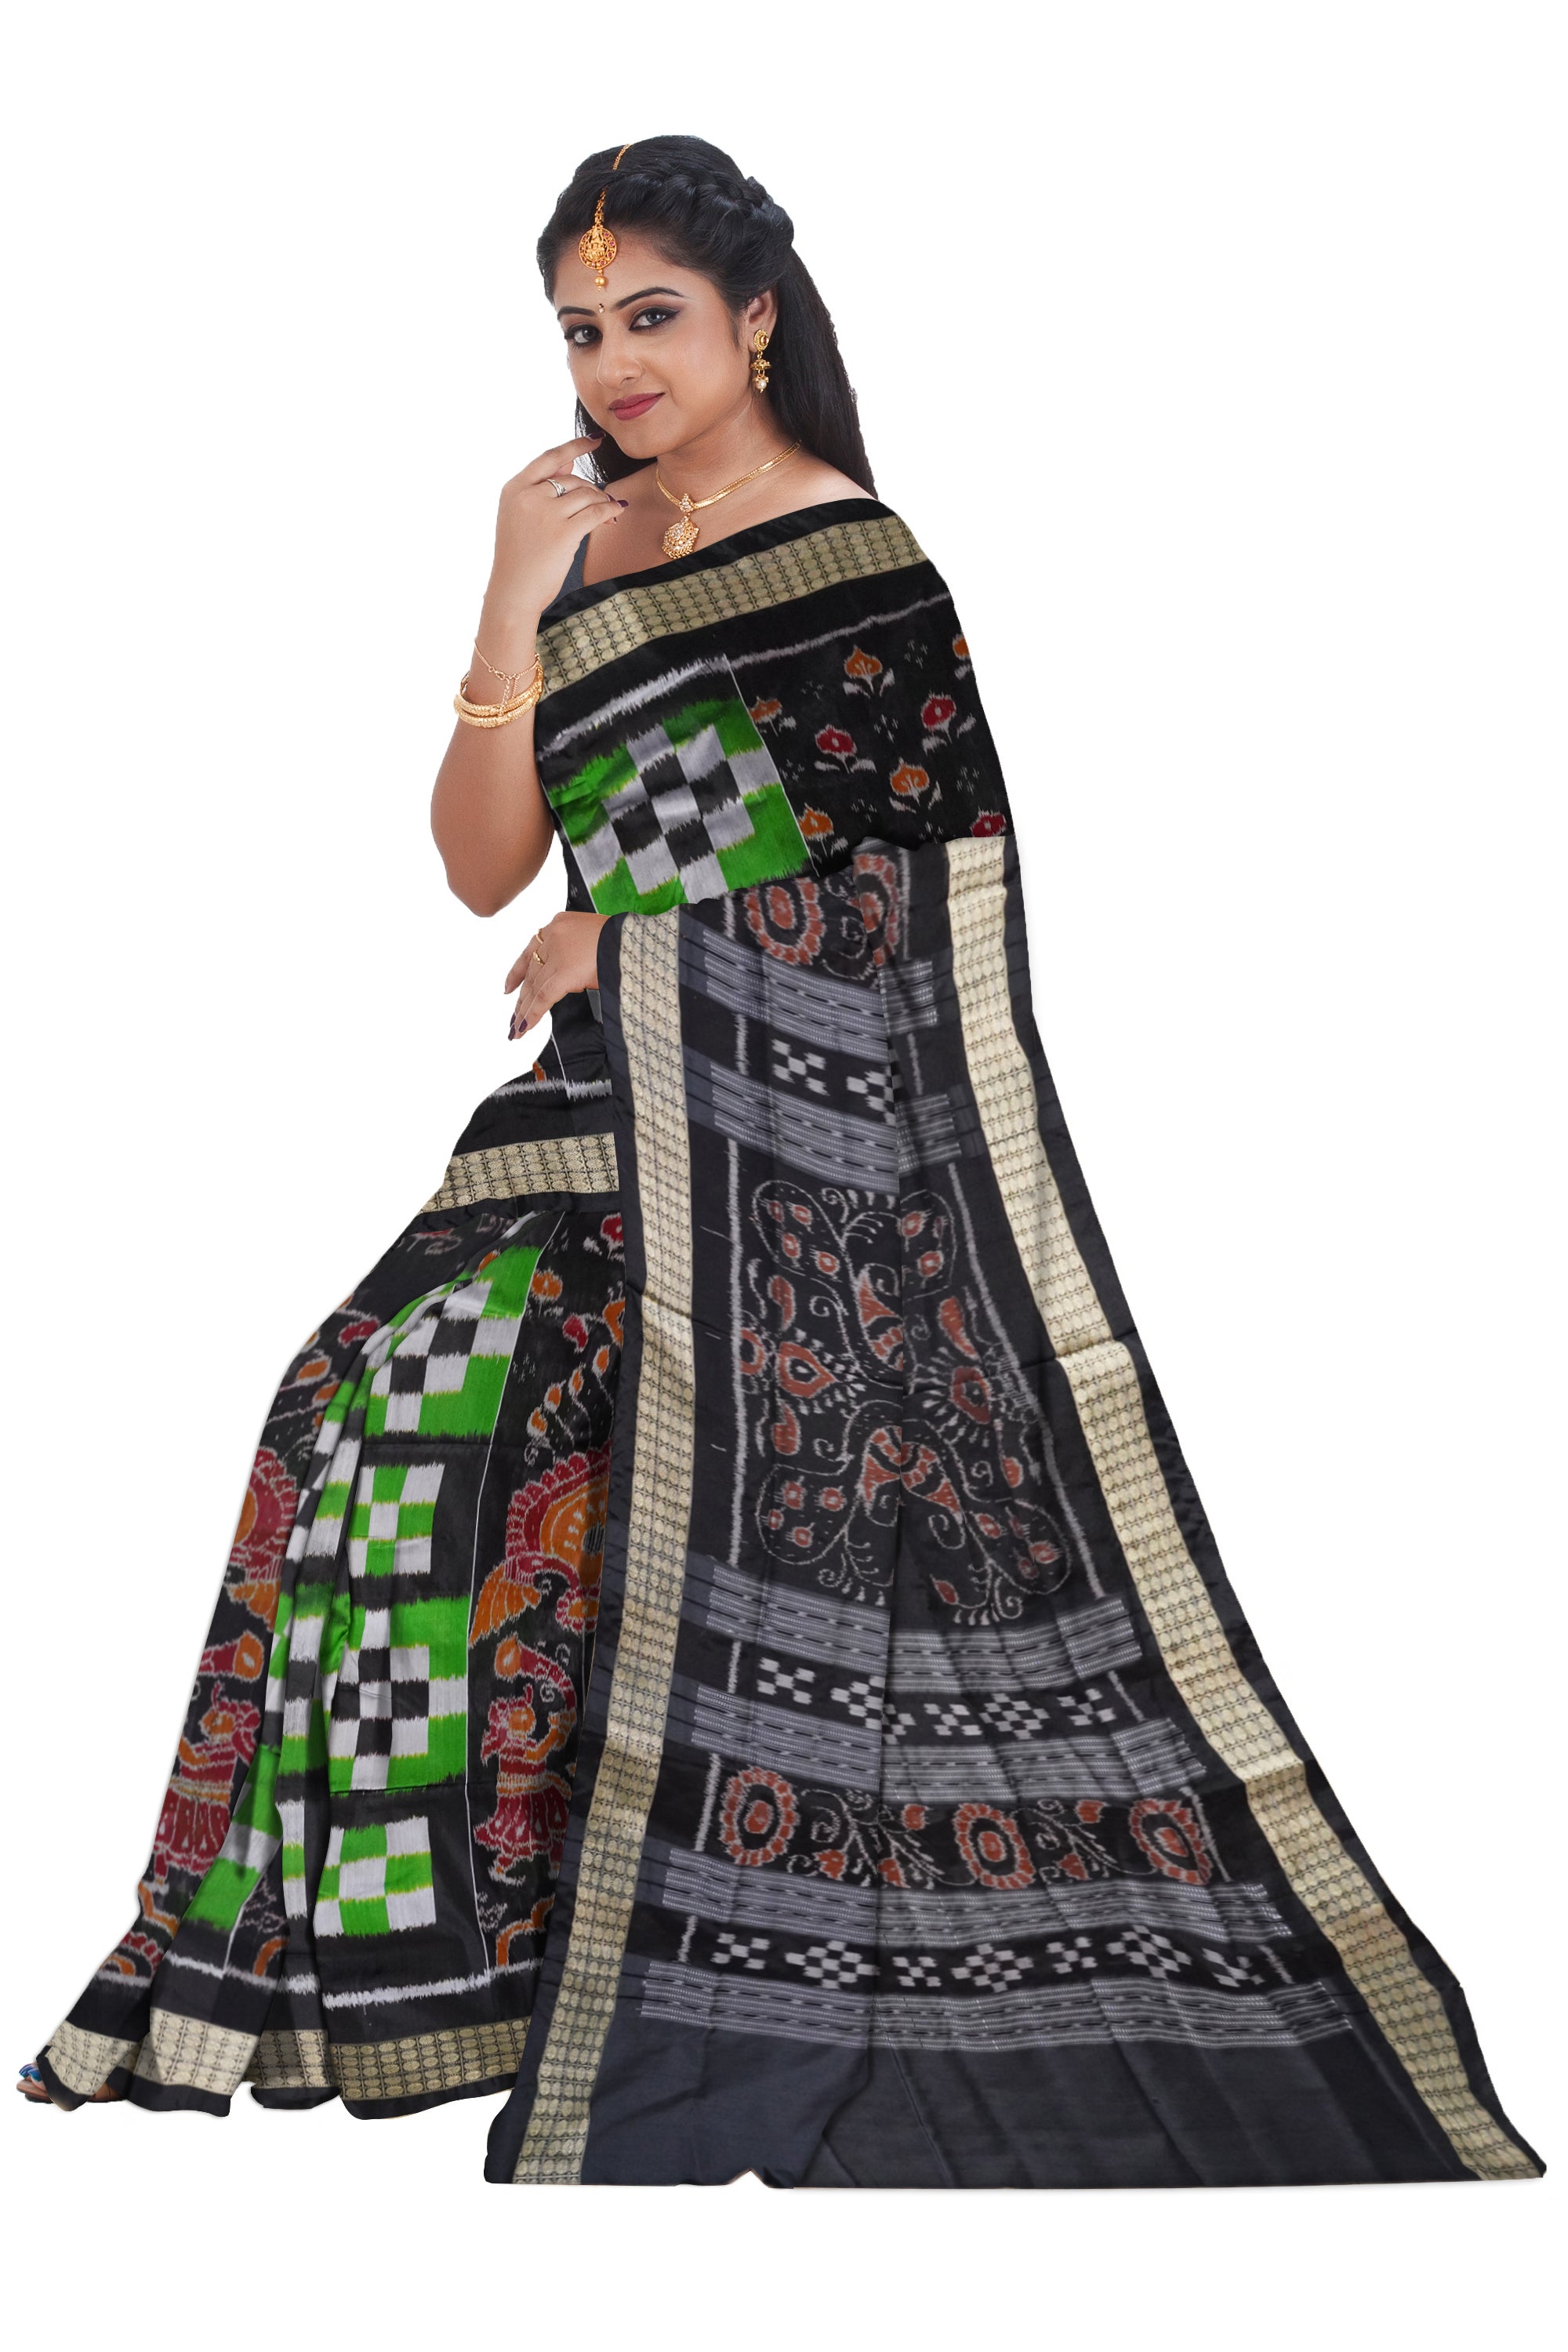 Pere pere design Nartaki with pasapali pattern Sambalpuri pata saree in green and black color. - Koshali Arts & Crafts Enterprise